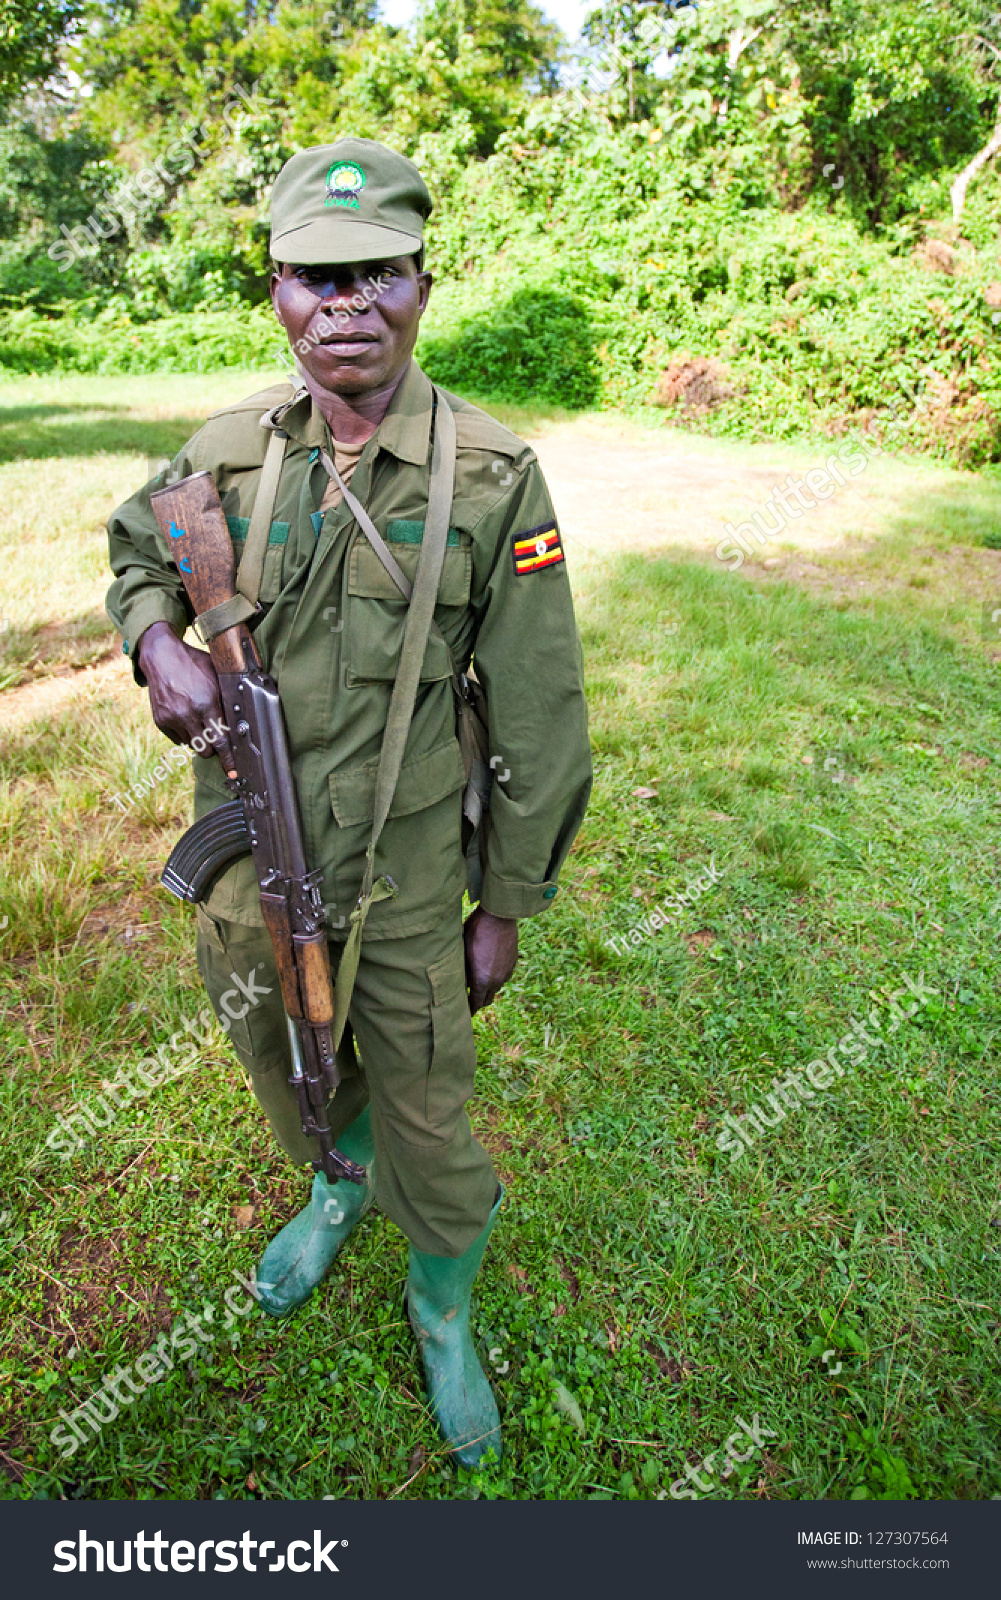 BWINDI, UGANDA - OCTOBER 22: Unidentified national park ranger on October 22, 2012 in the Bwindi National Park, Uganda. The Bwindi National Park is the most famous tourist attraction in Uganda. #127307564